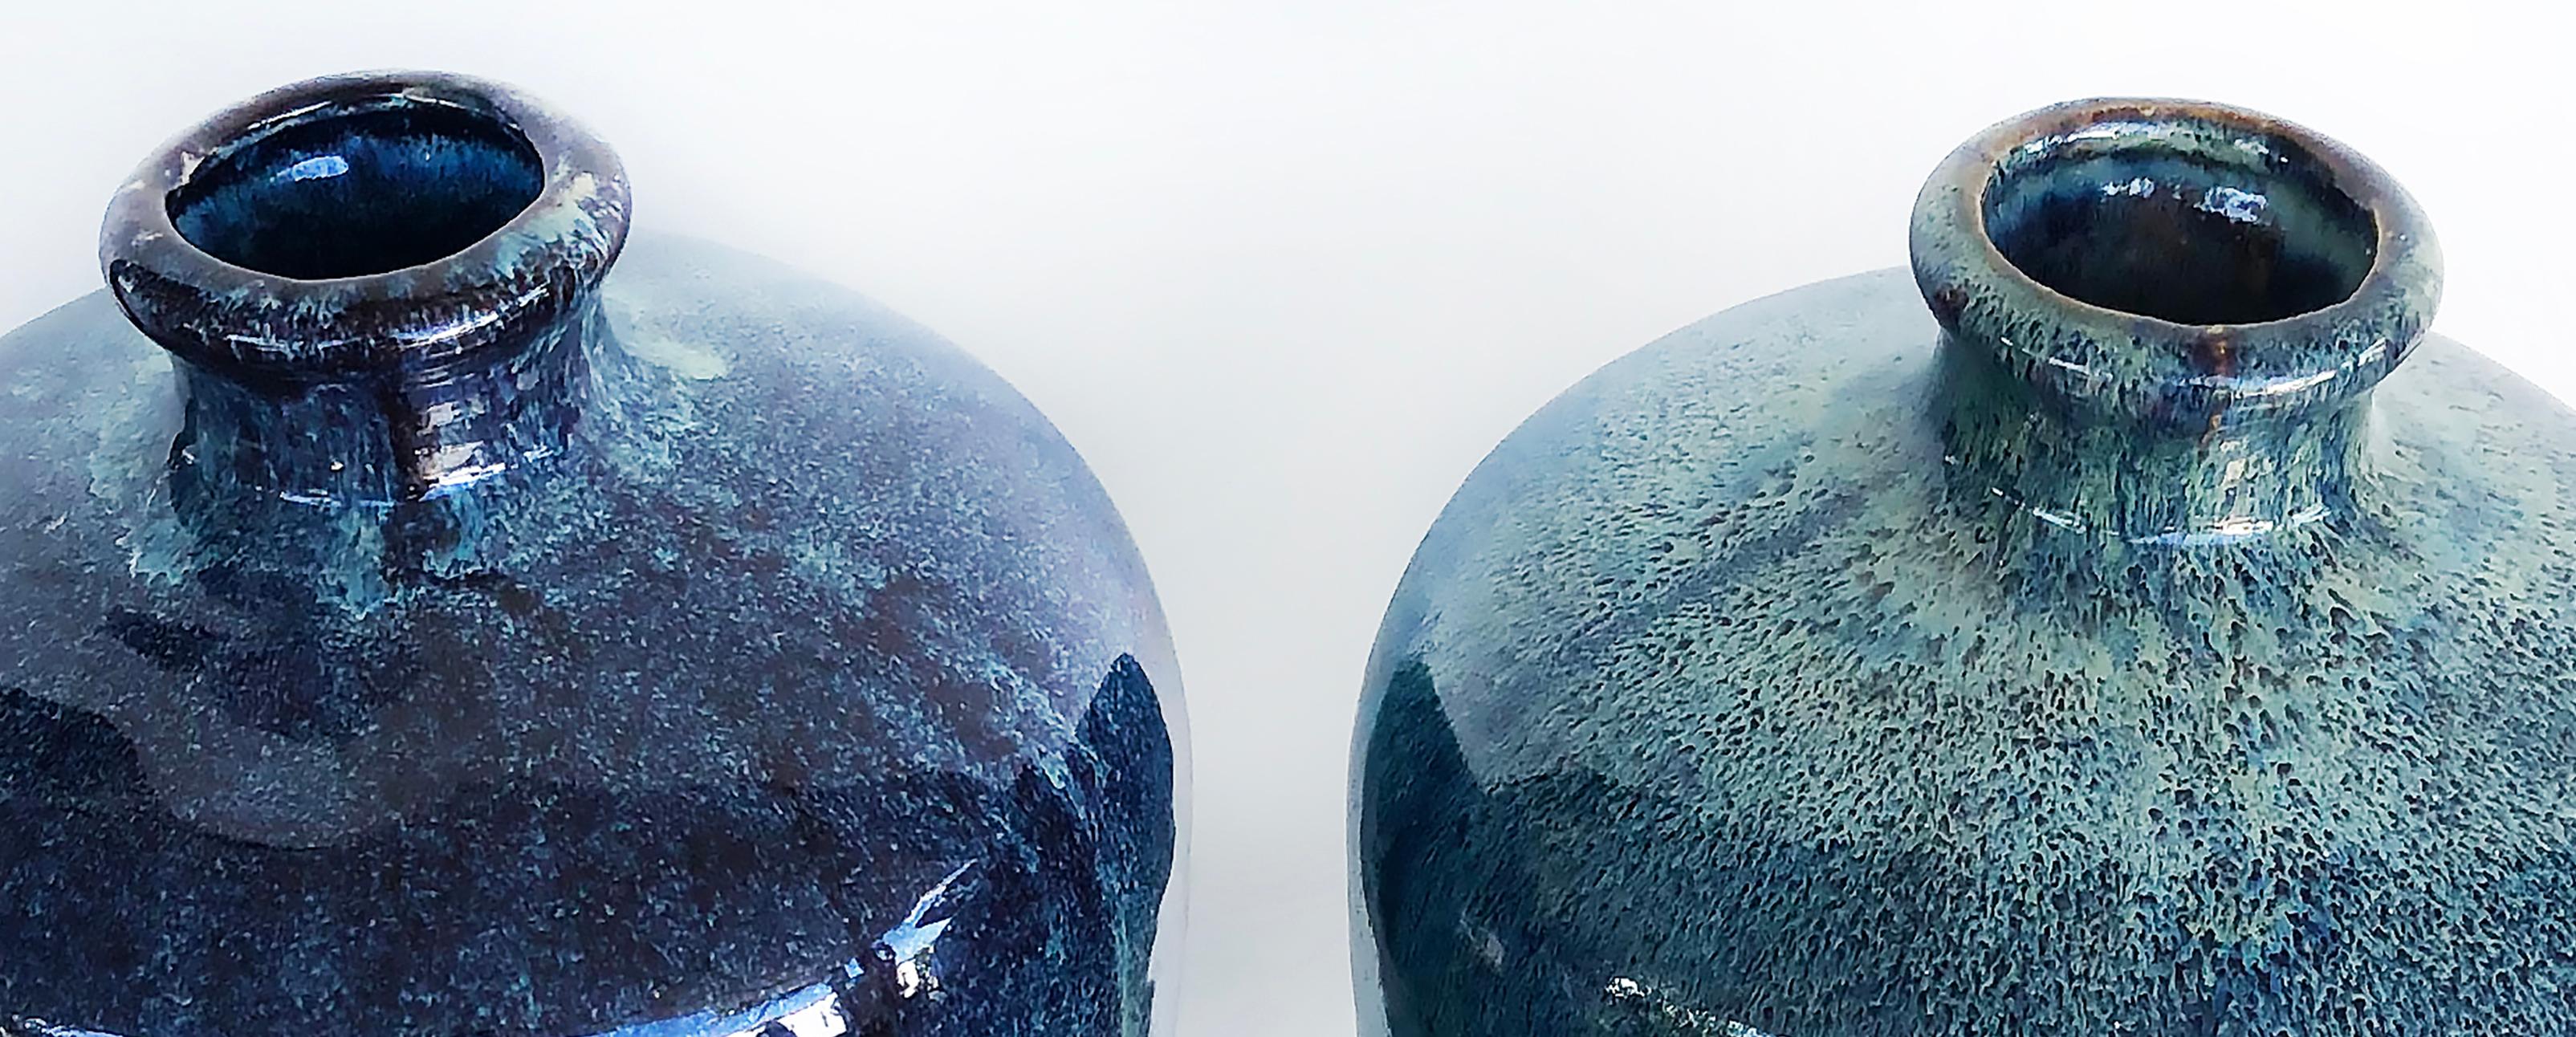 Chinese Blue Drip Glazed Ceramic Urn Vases, a Pair 1